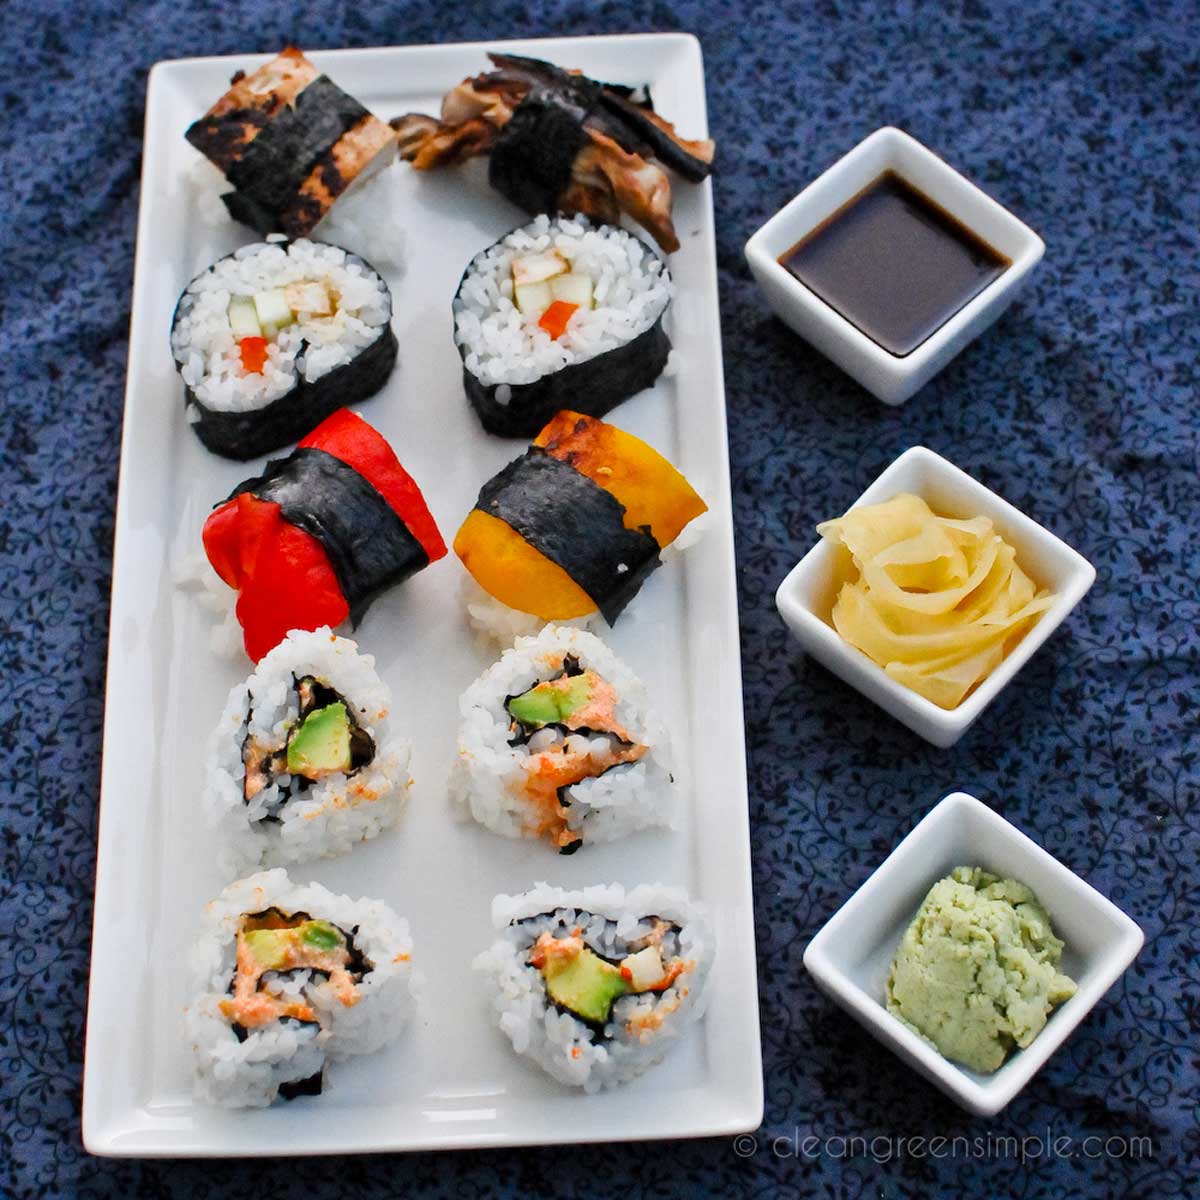 https://cleangreensimple.com/wp-content/uploads/2011/04/vegan-sushi.jpg